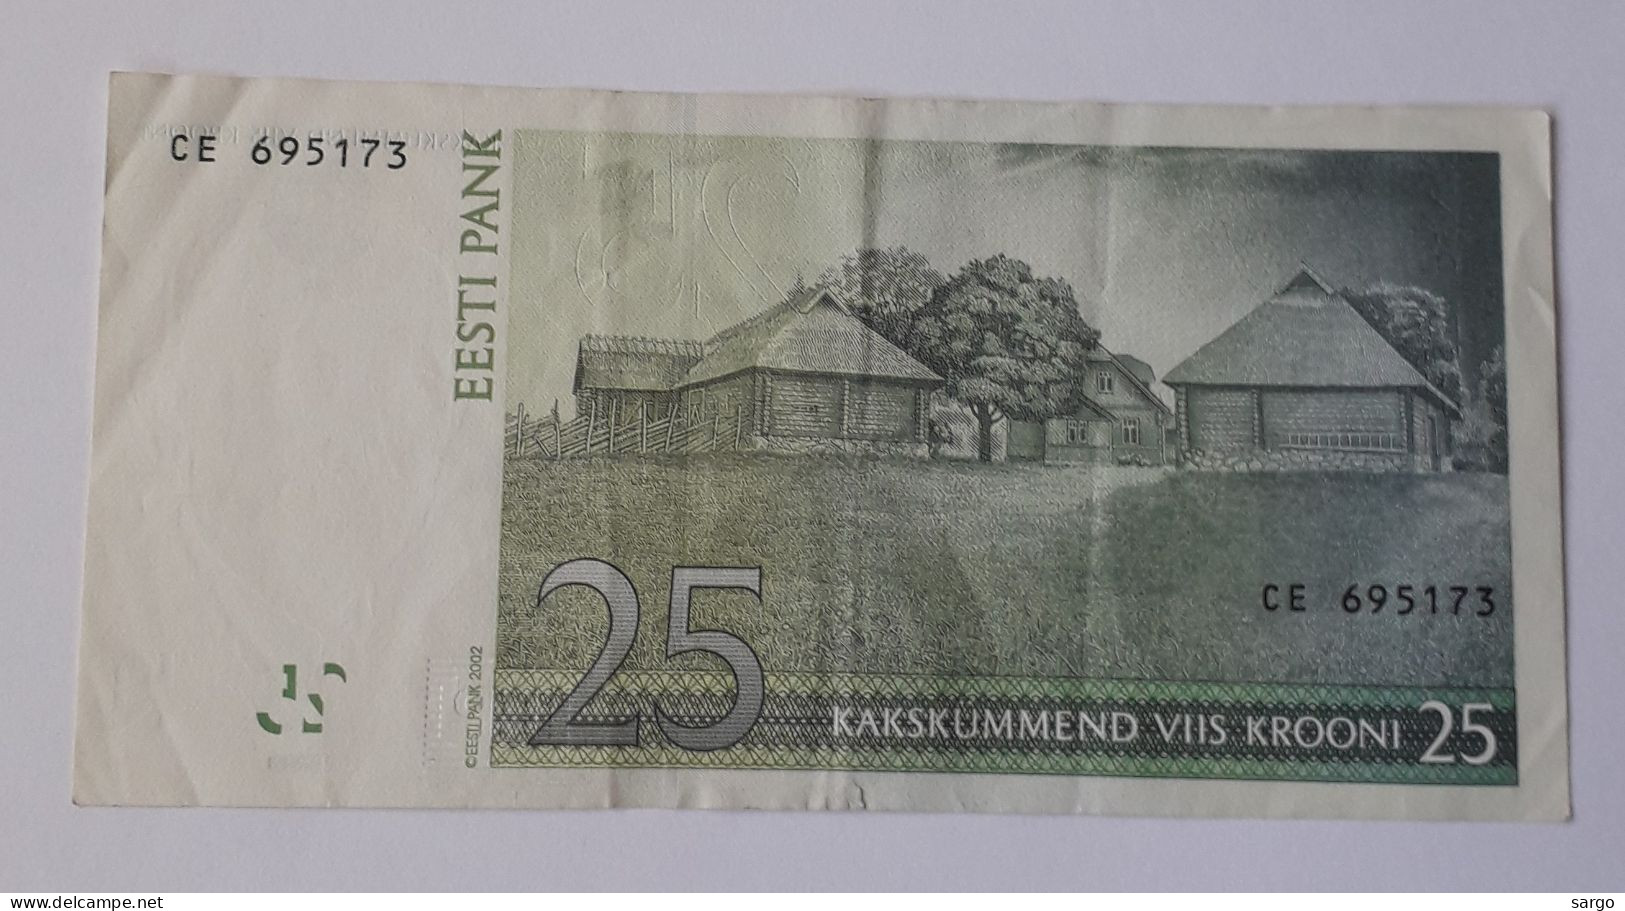 ESTONIA - 25 KROONI -  P 84 - 2002 -  CIRC - BANKNOTES - PAPER MONEY - CARTAMONETA - - Estonia